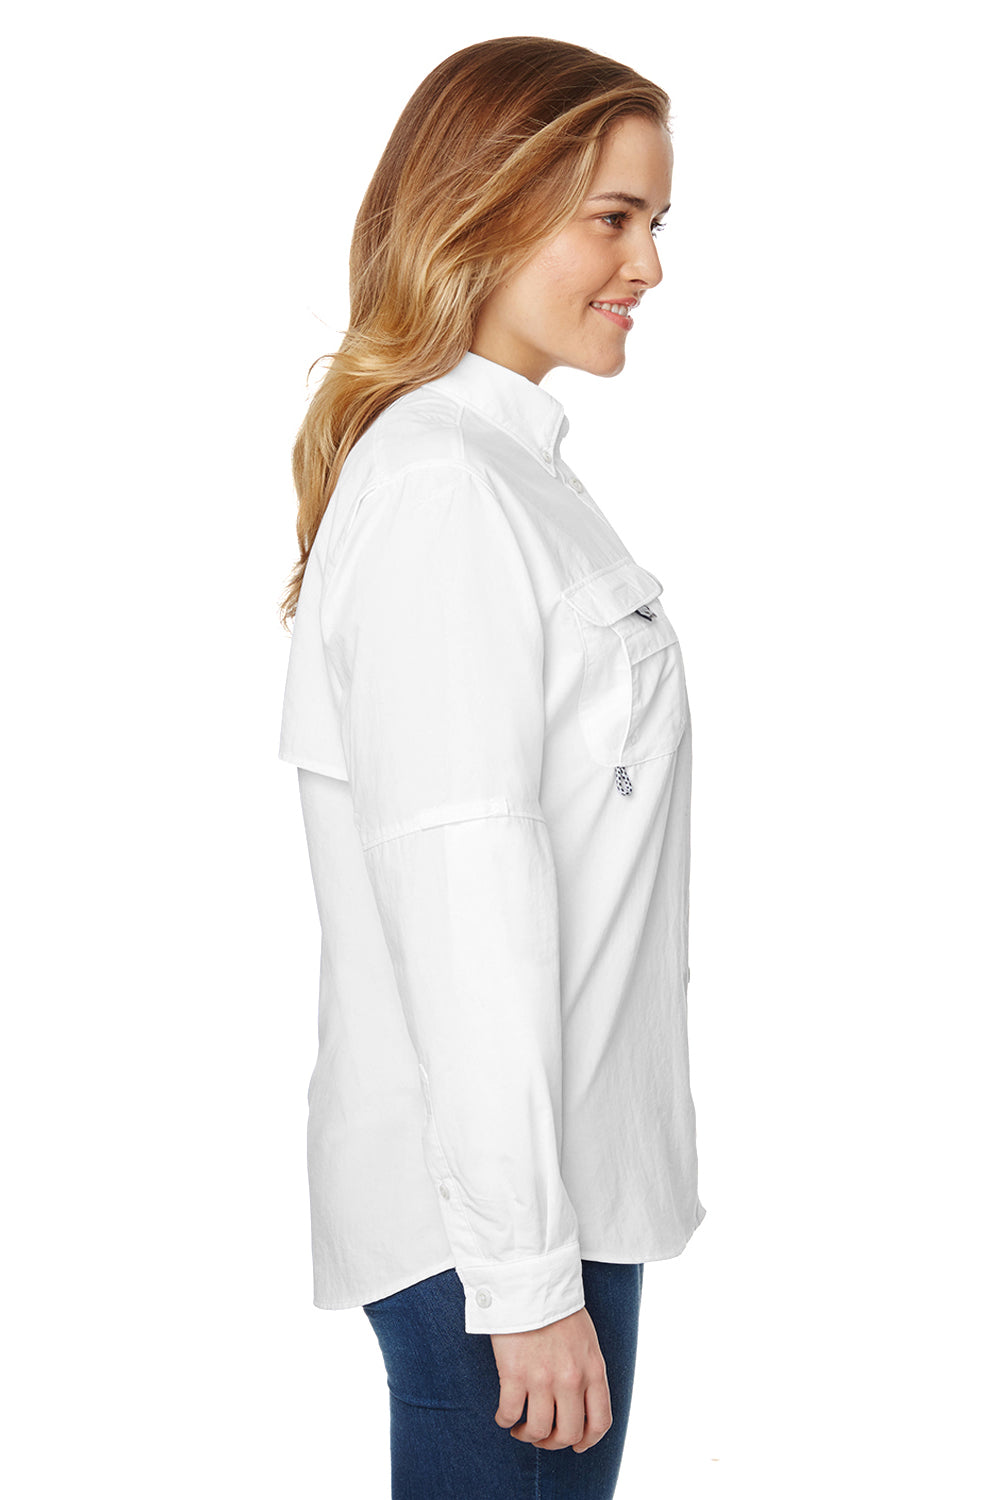 Columbia 7314 Womens Bahama Moisture Wicking Long Sleeve Button Down Shirt w/ Double Pockets White Side